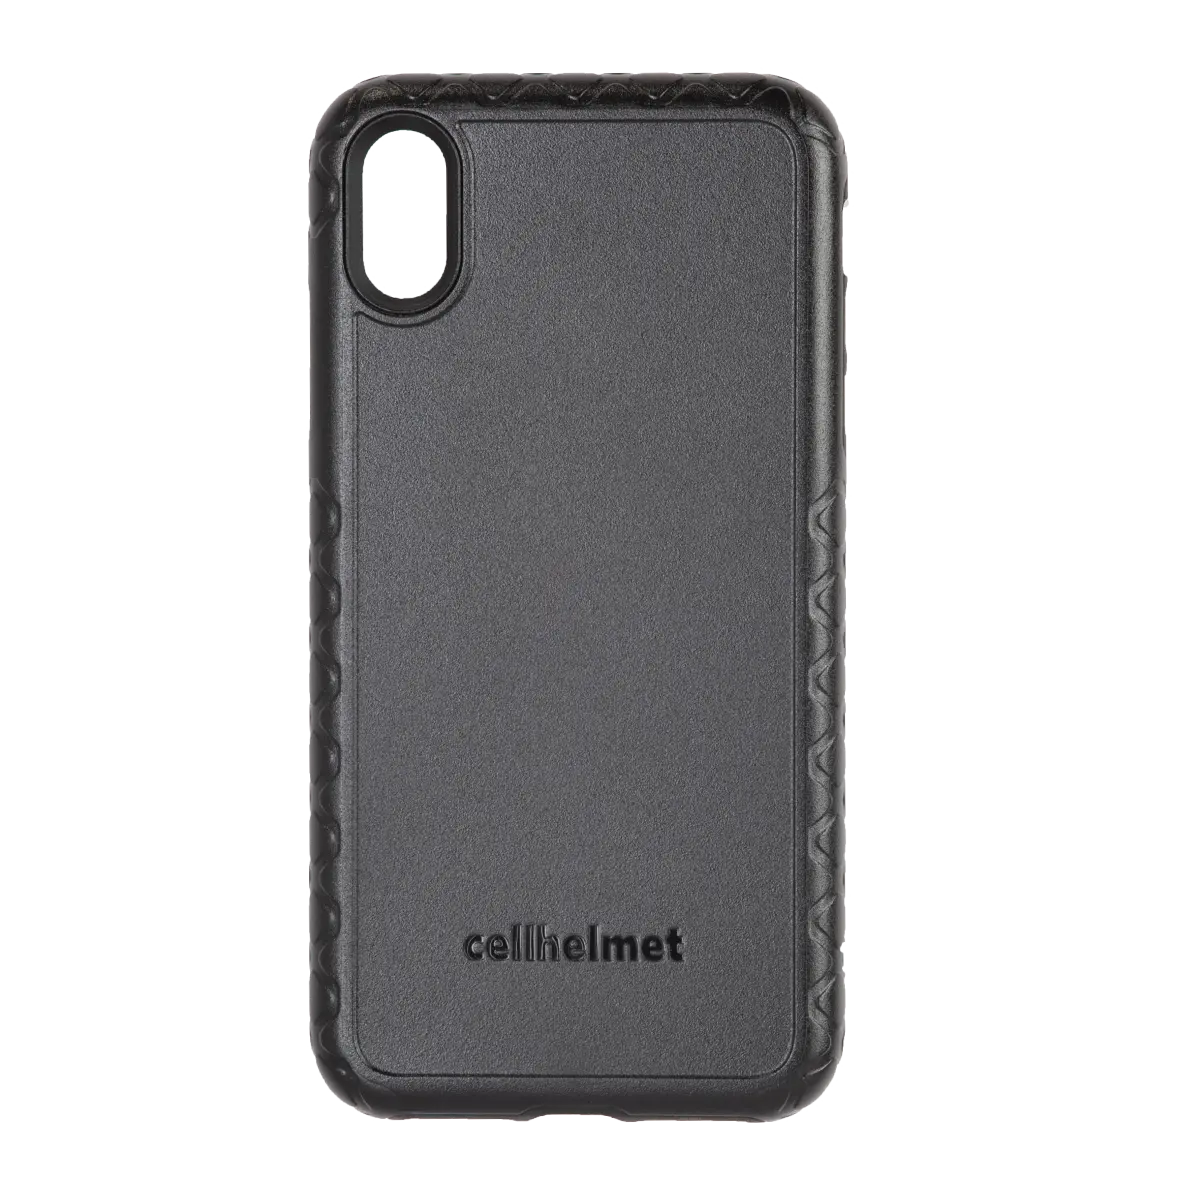 Black cellhelmet Custom Printed Case for iPhone XS Max